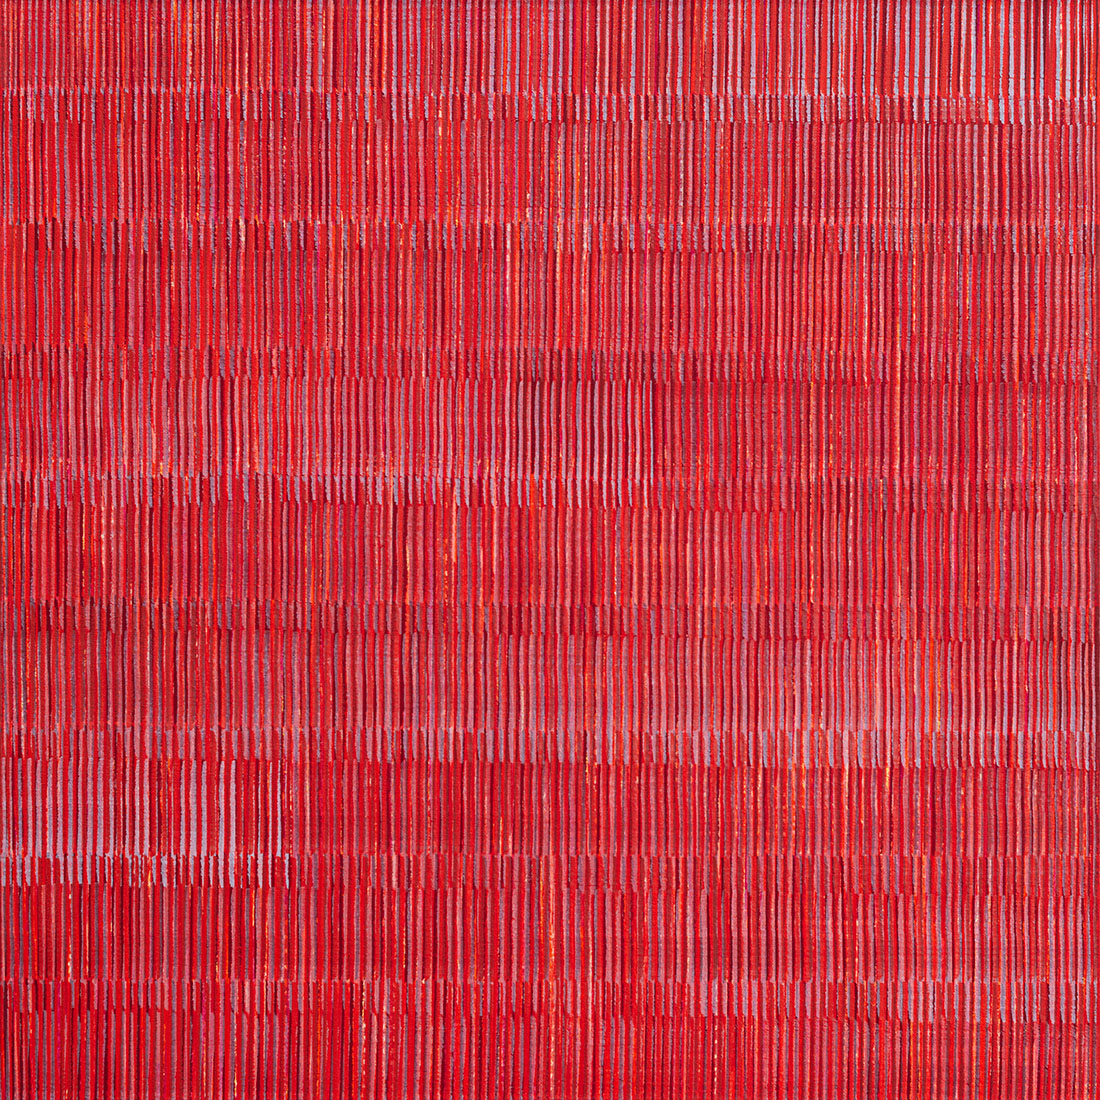 Nikola Dimitrov, FarbraumRot I, 2019, Pigmente, Bindemittel auf Leinwand, 70 × 70 cm